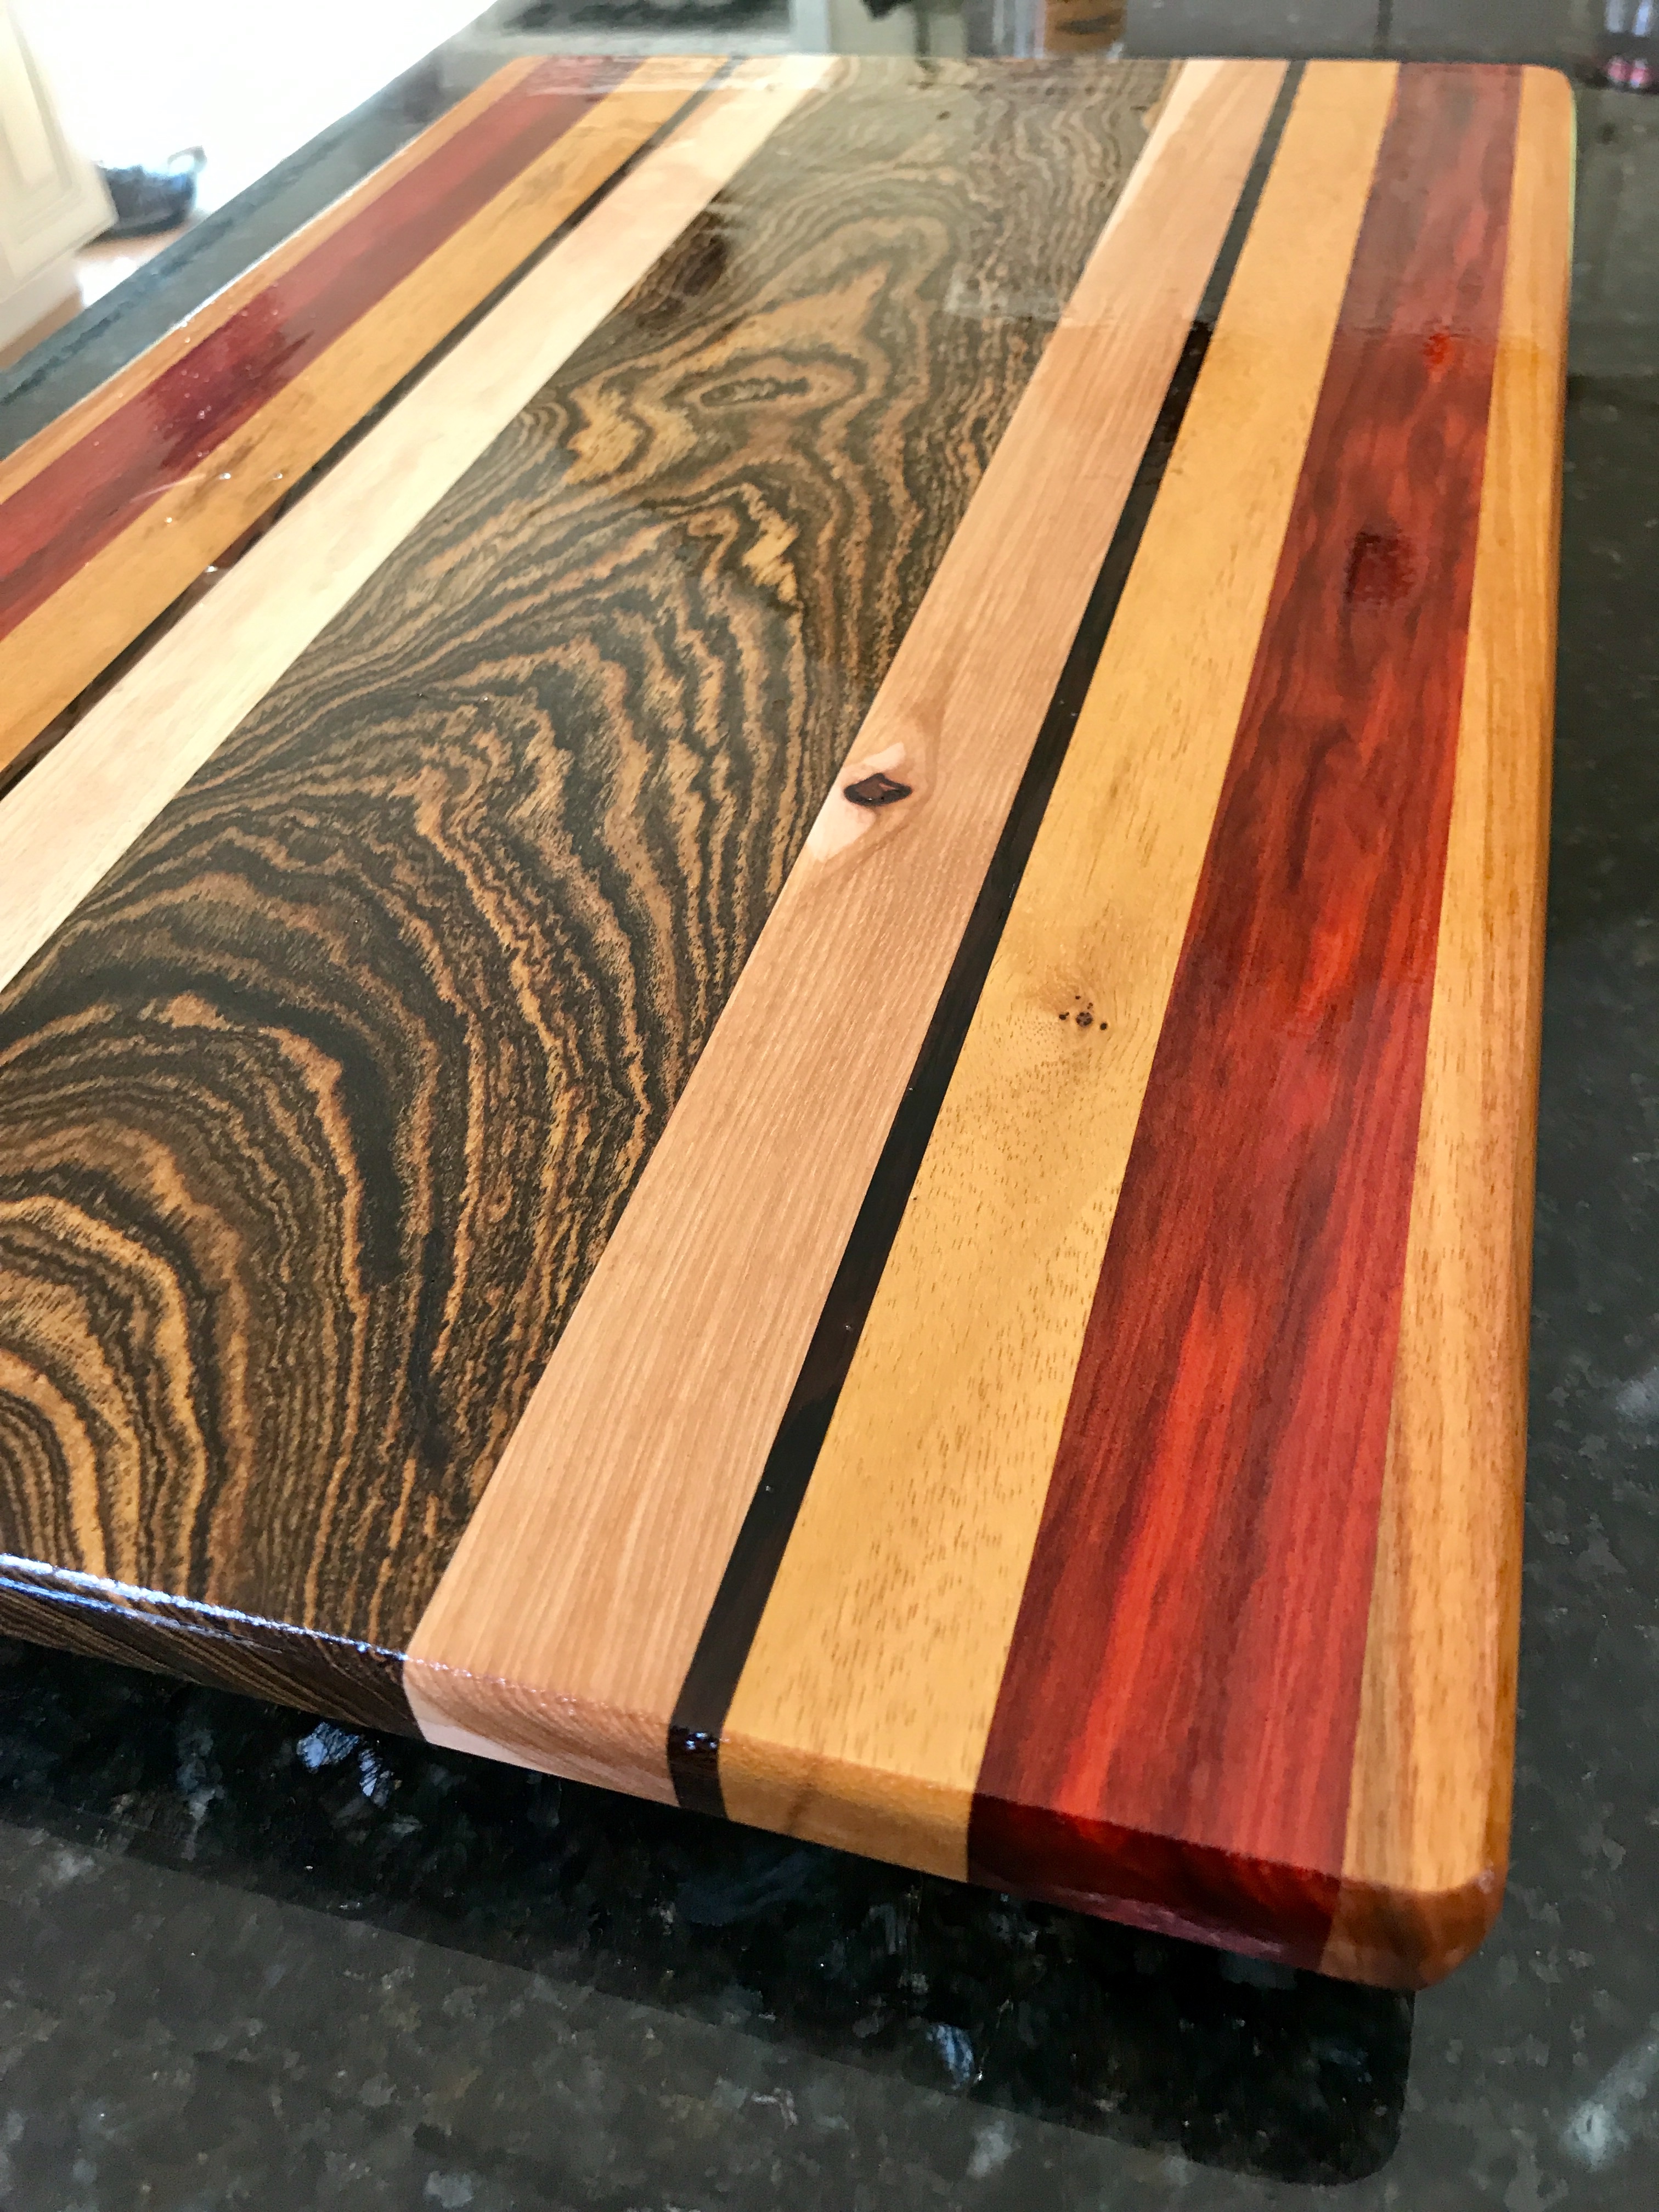 Well-Designed Wooden Board